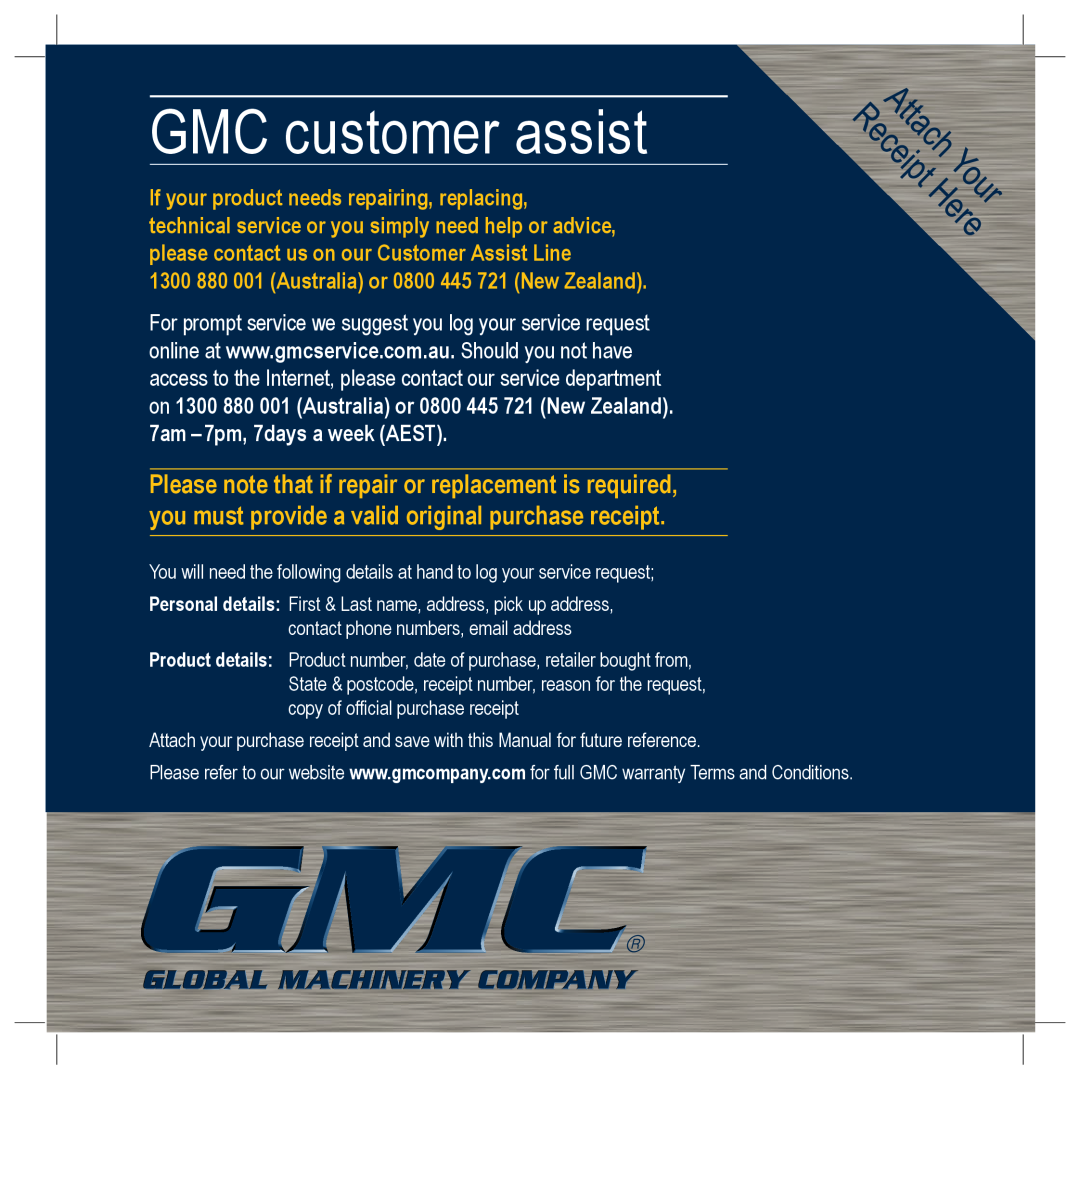 Global Machinery Company G25 instruction manual GMC customer assist, 1300 880 001 Australia or 0800 445 721 New Zealand 